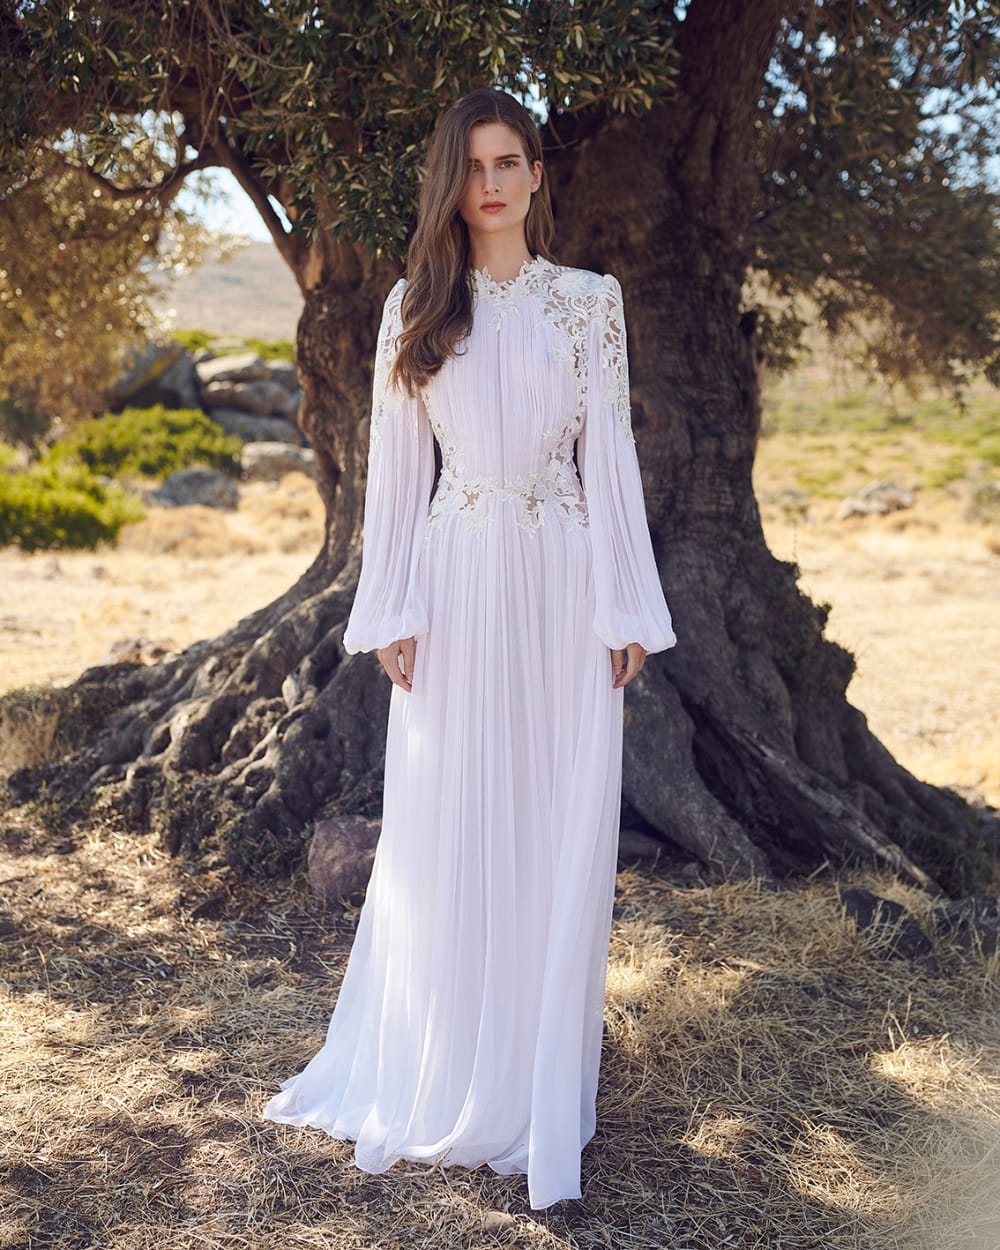 Costarellos Bridal Fall 2020 - Dress for the Wedding